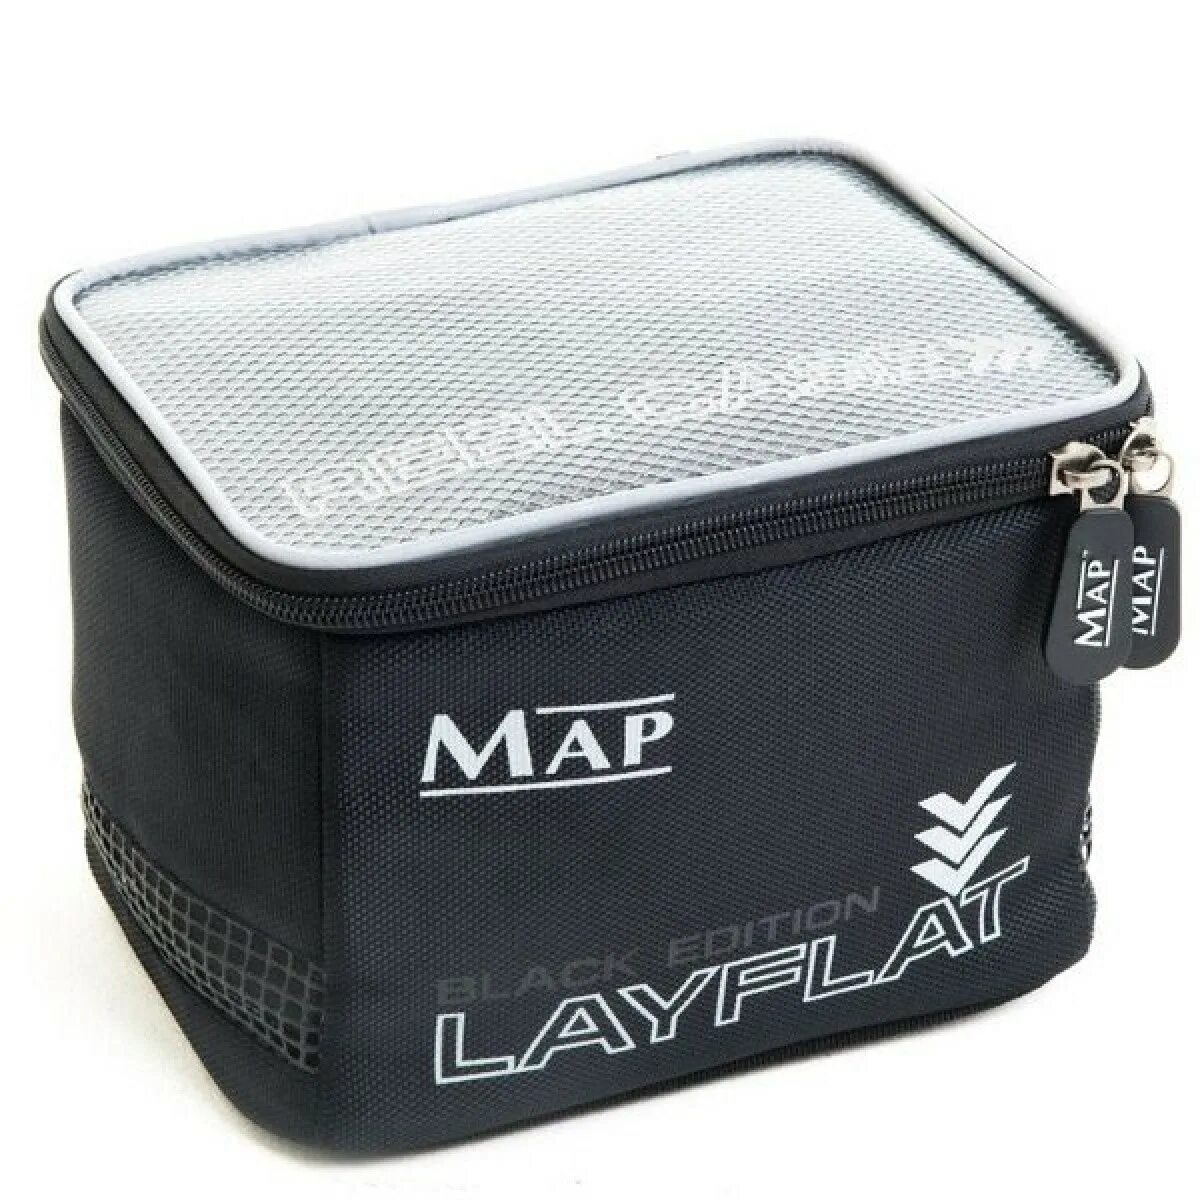 Map сумка-чехол для катушек Parabolix Layflat Black Edition Reel Case. Чехол для катушек рыболовных Daiwa. Map Parabolix Layflat Black Edition Accessory Bag. Кейс для катушек Daiwa.